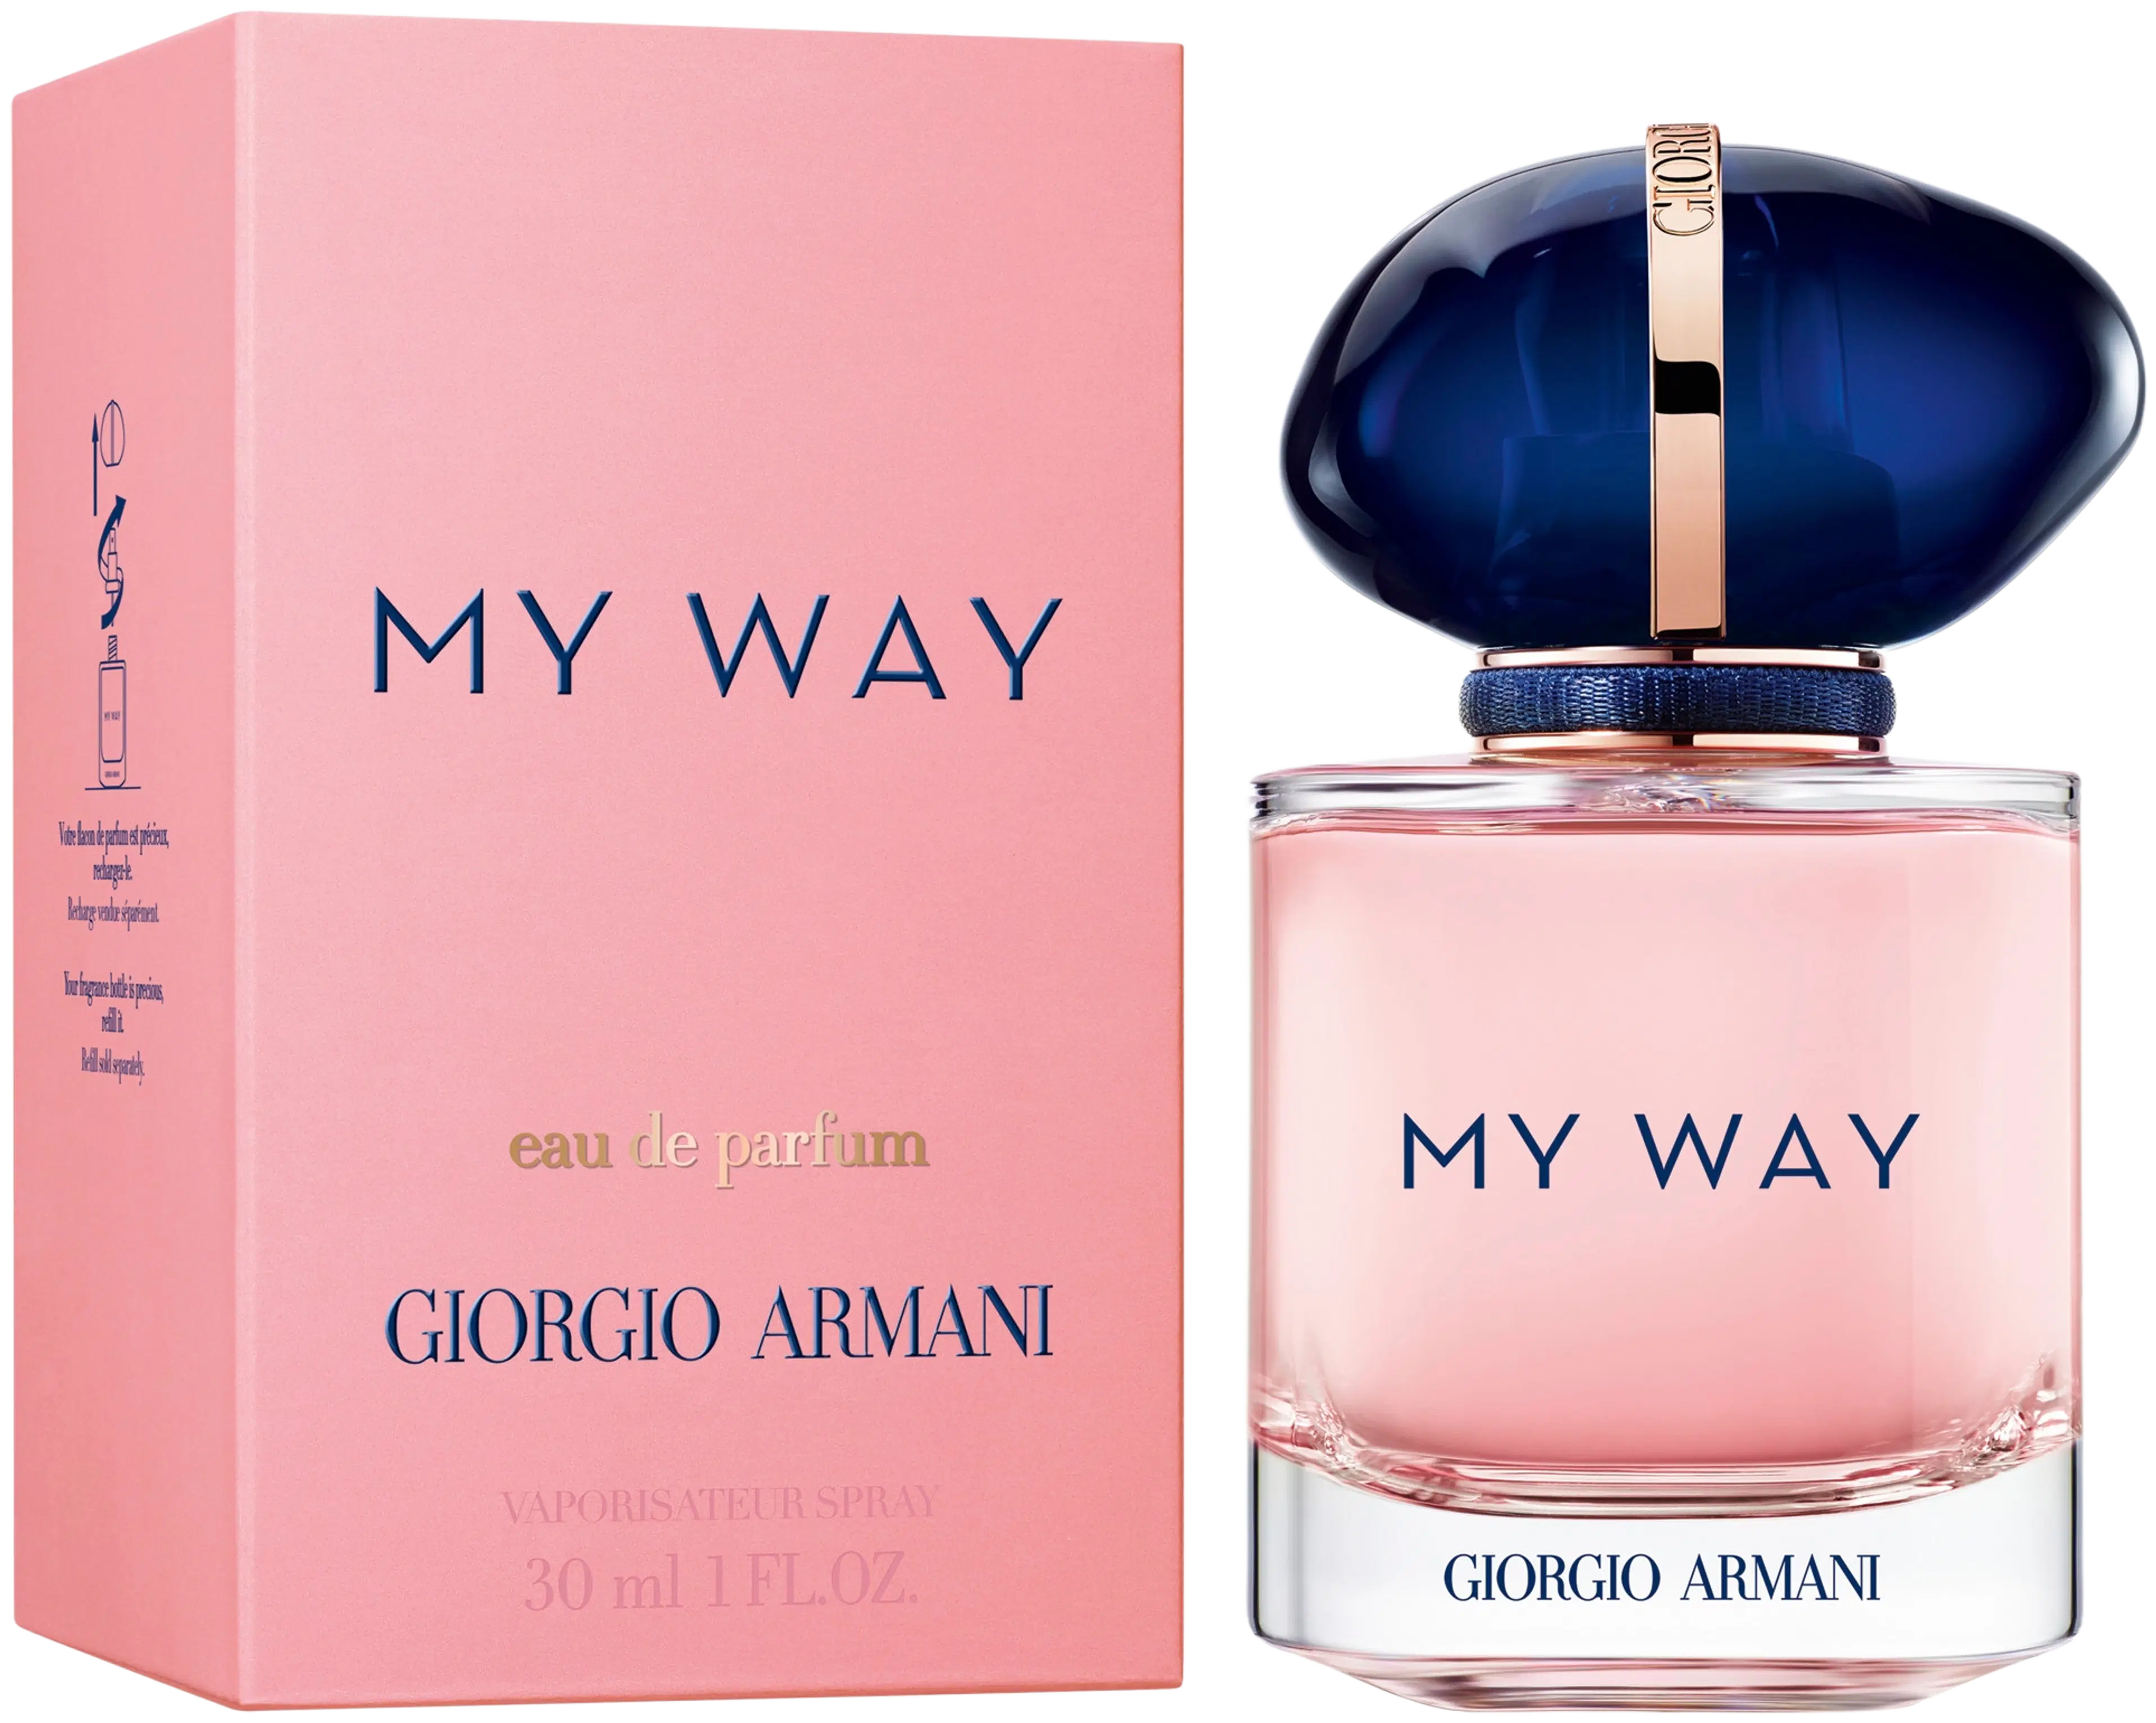 Giorgio Armani My Way EdP tuoksu 30 ml